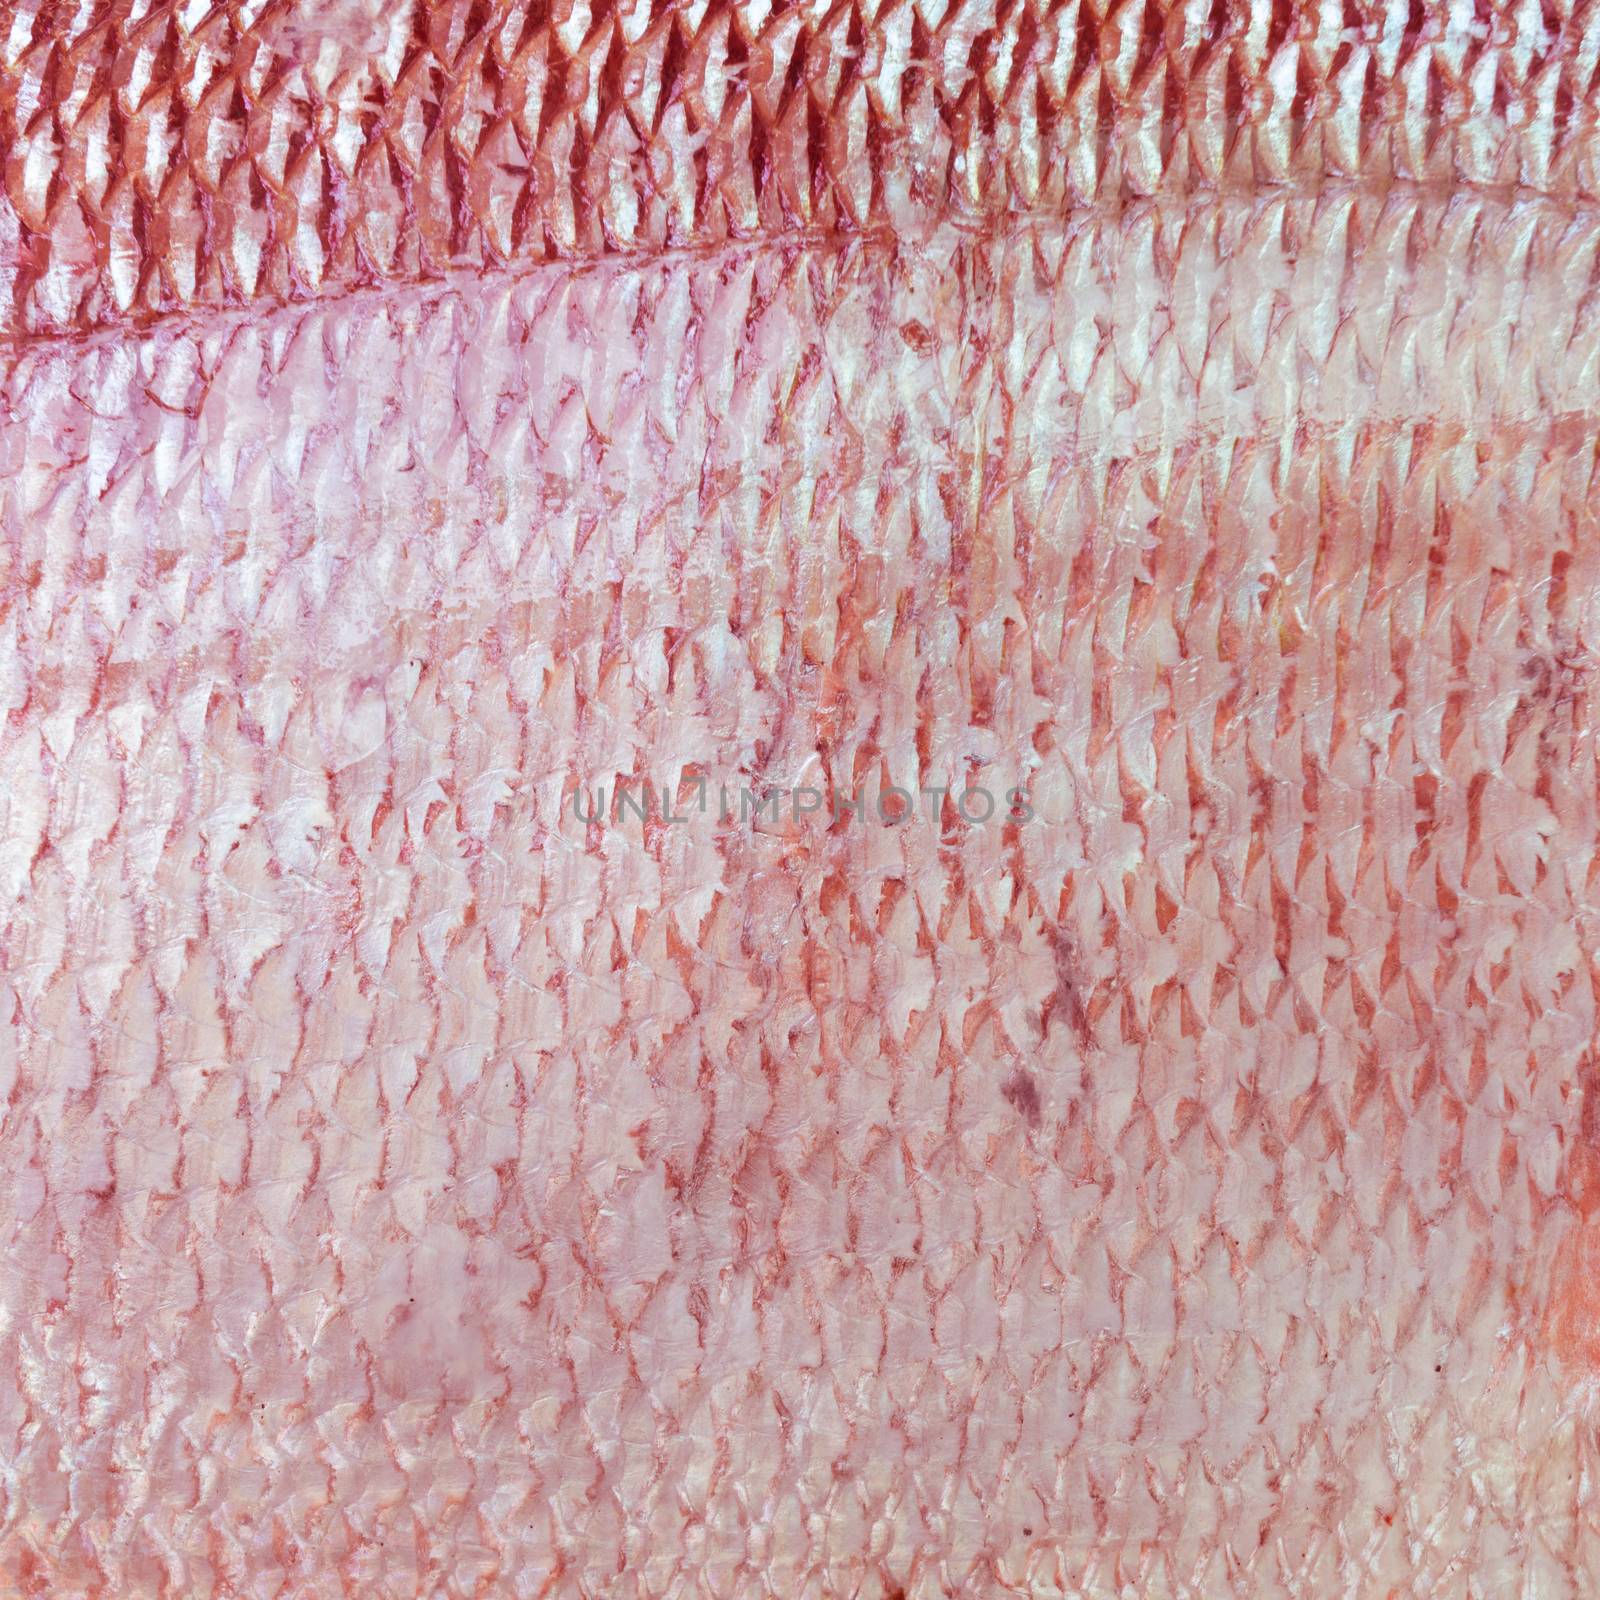 Texture of fish skin  by wyoosumran